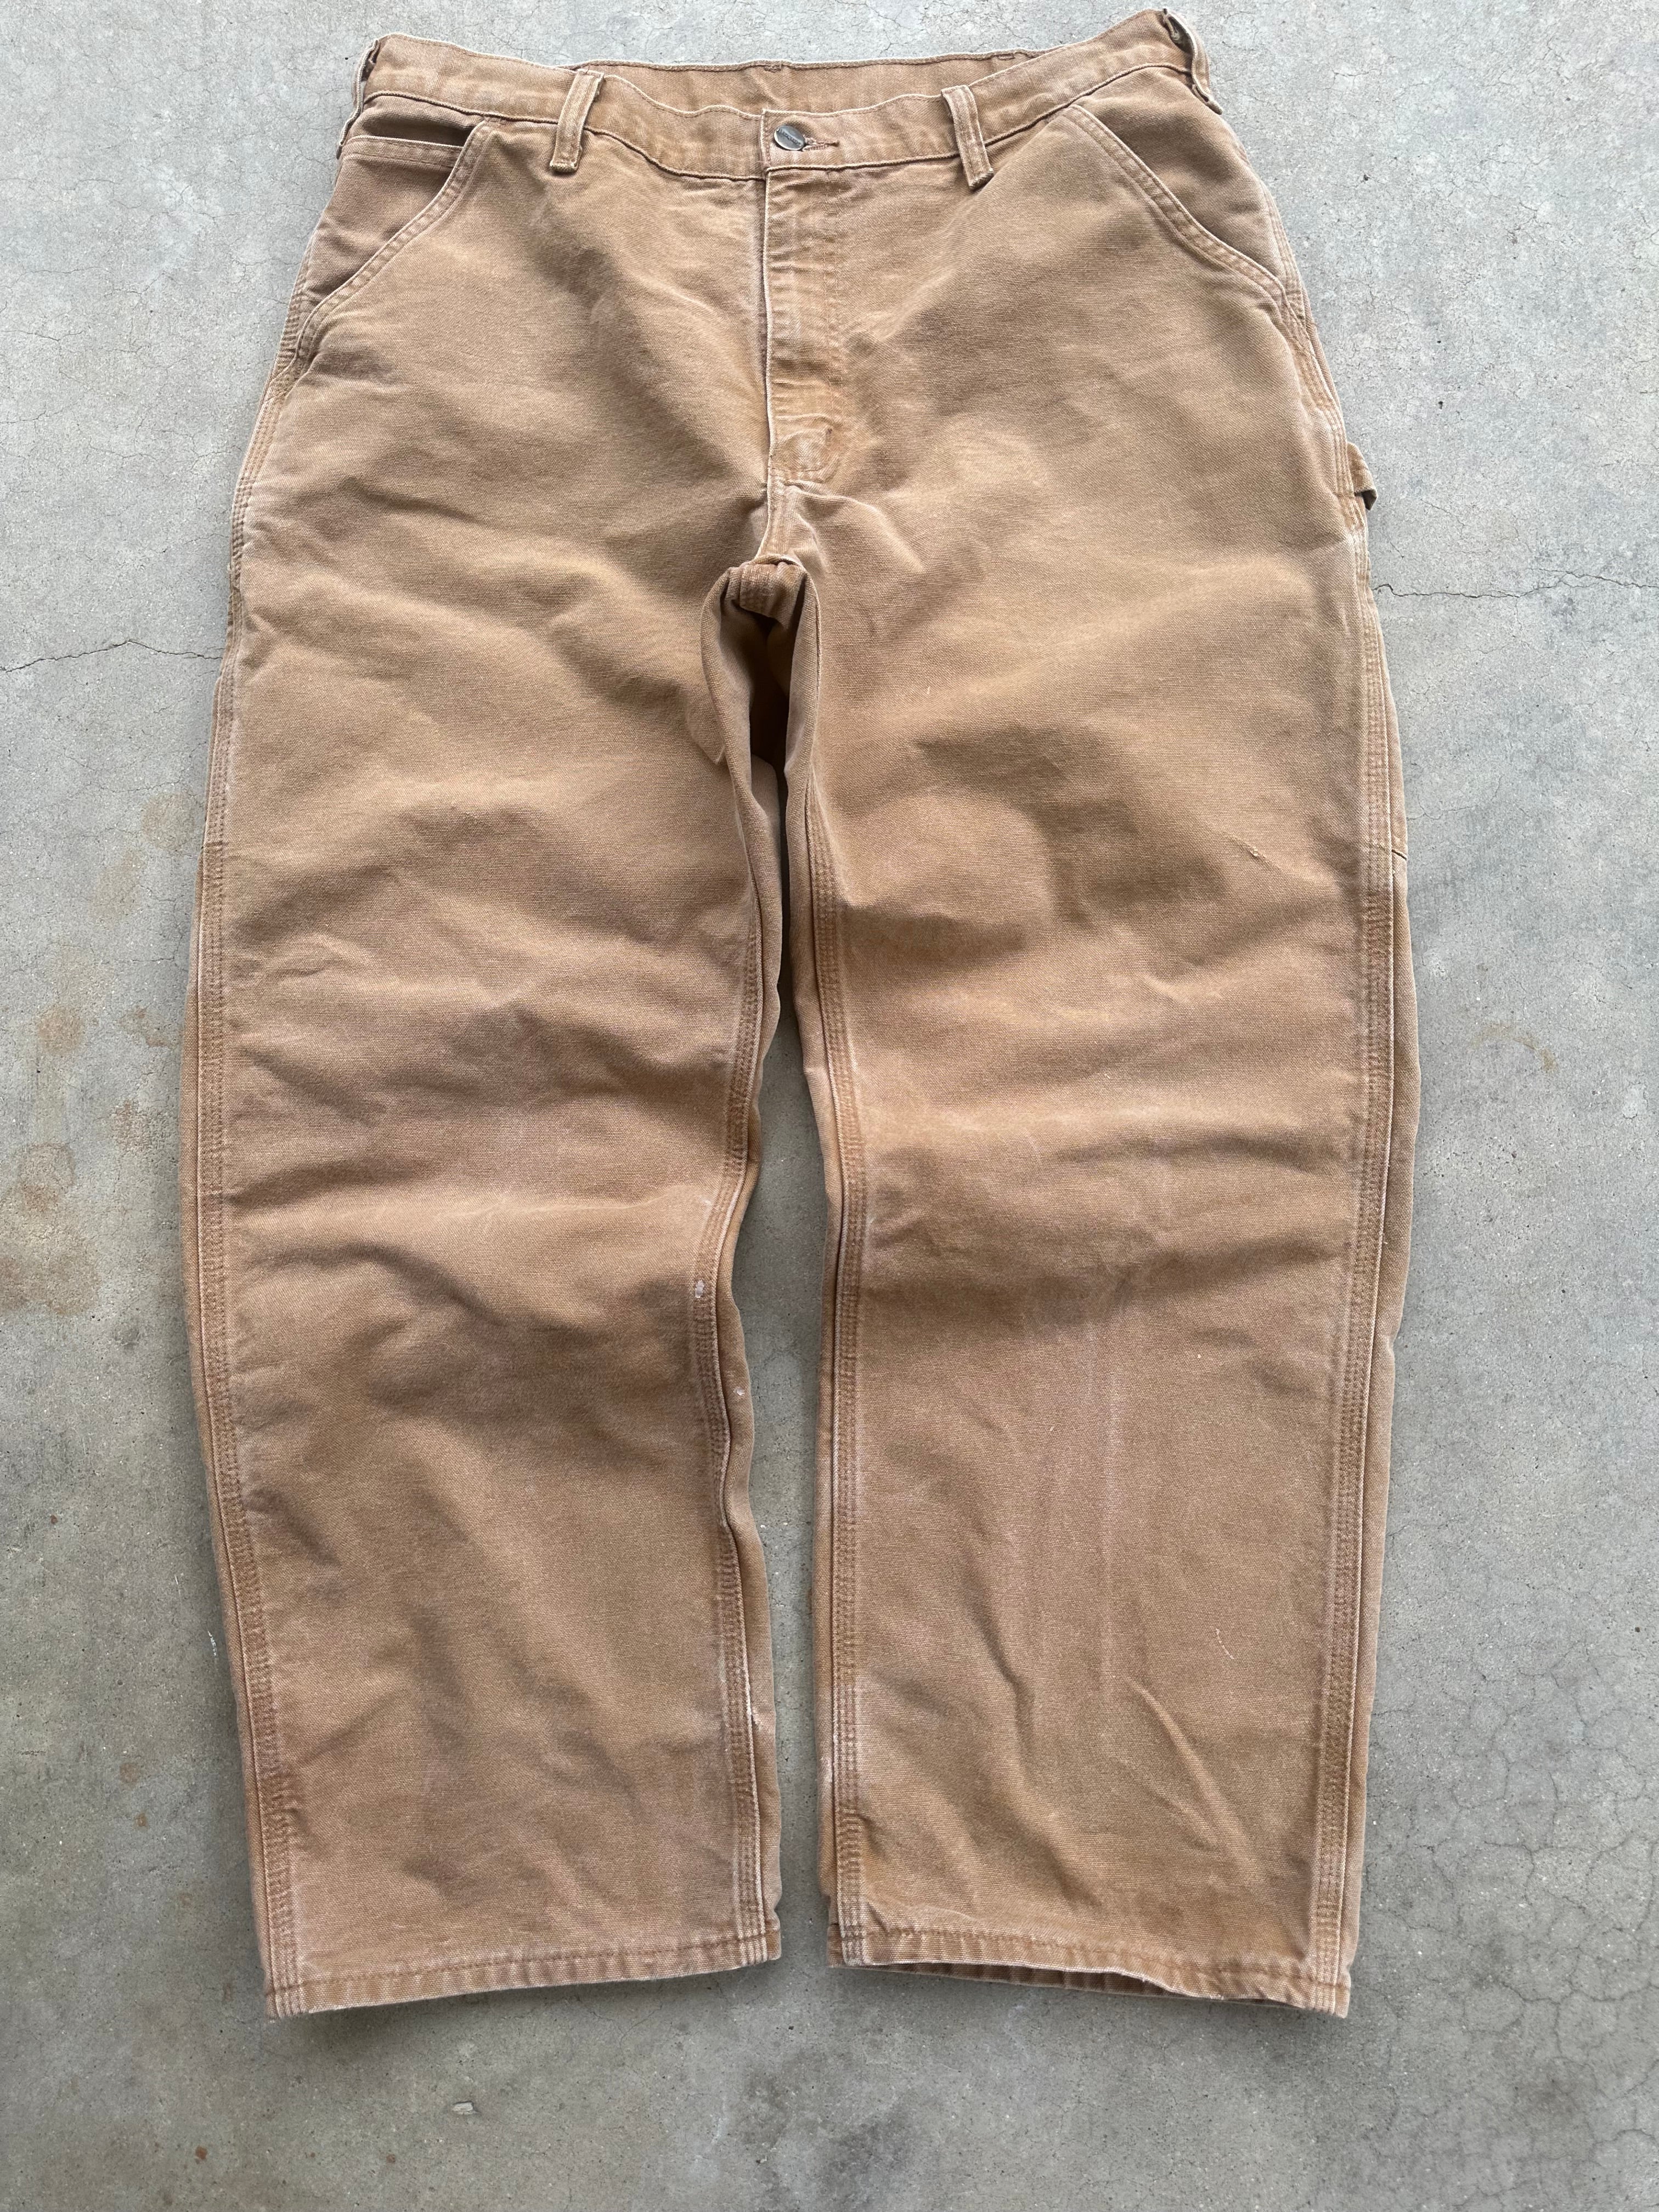 Vintage Carhartt Carpenter Pants (36/28)